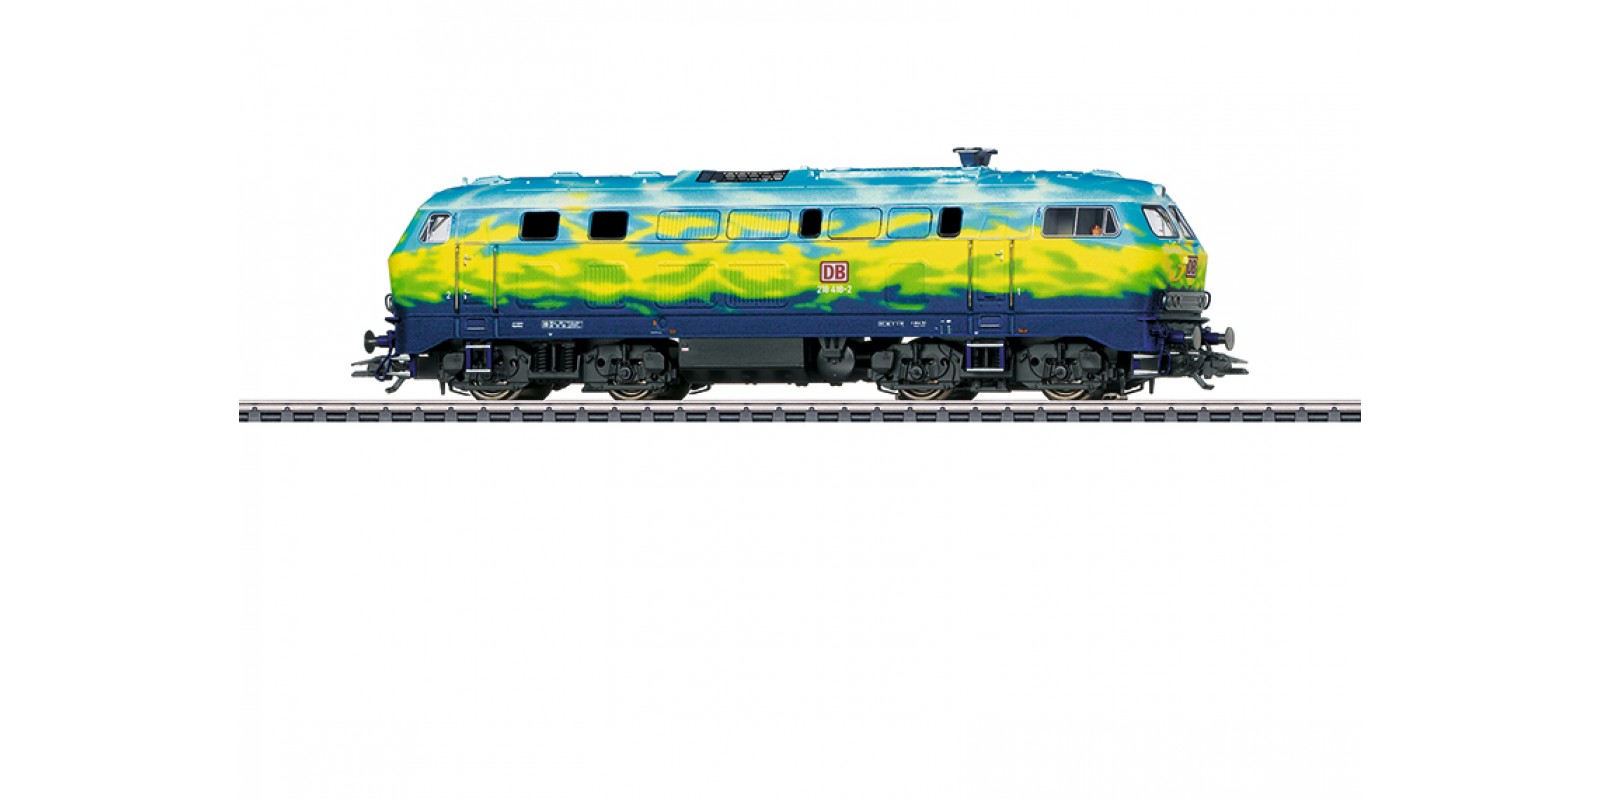 39219 Class 218 Diesel Locomotive